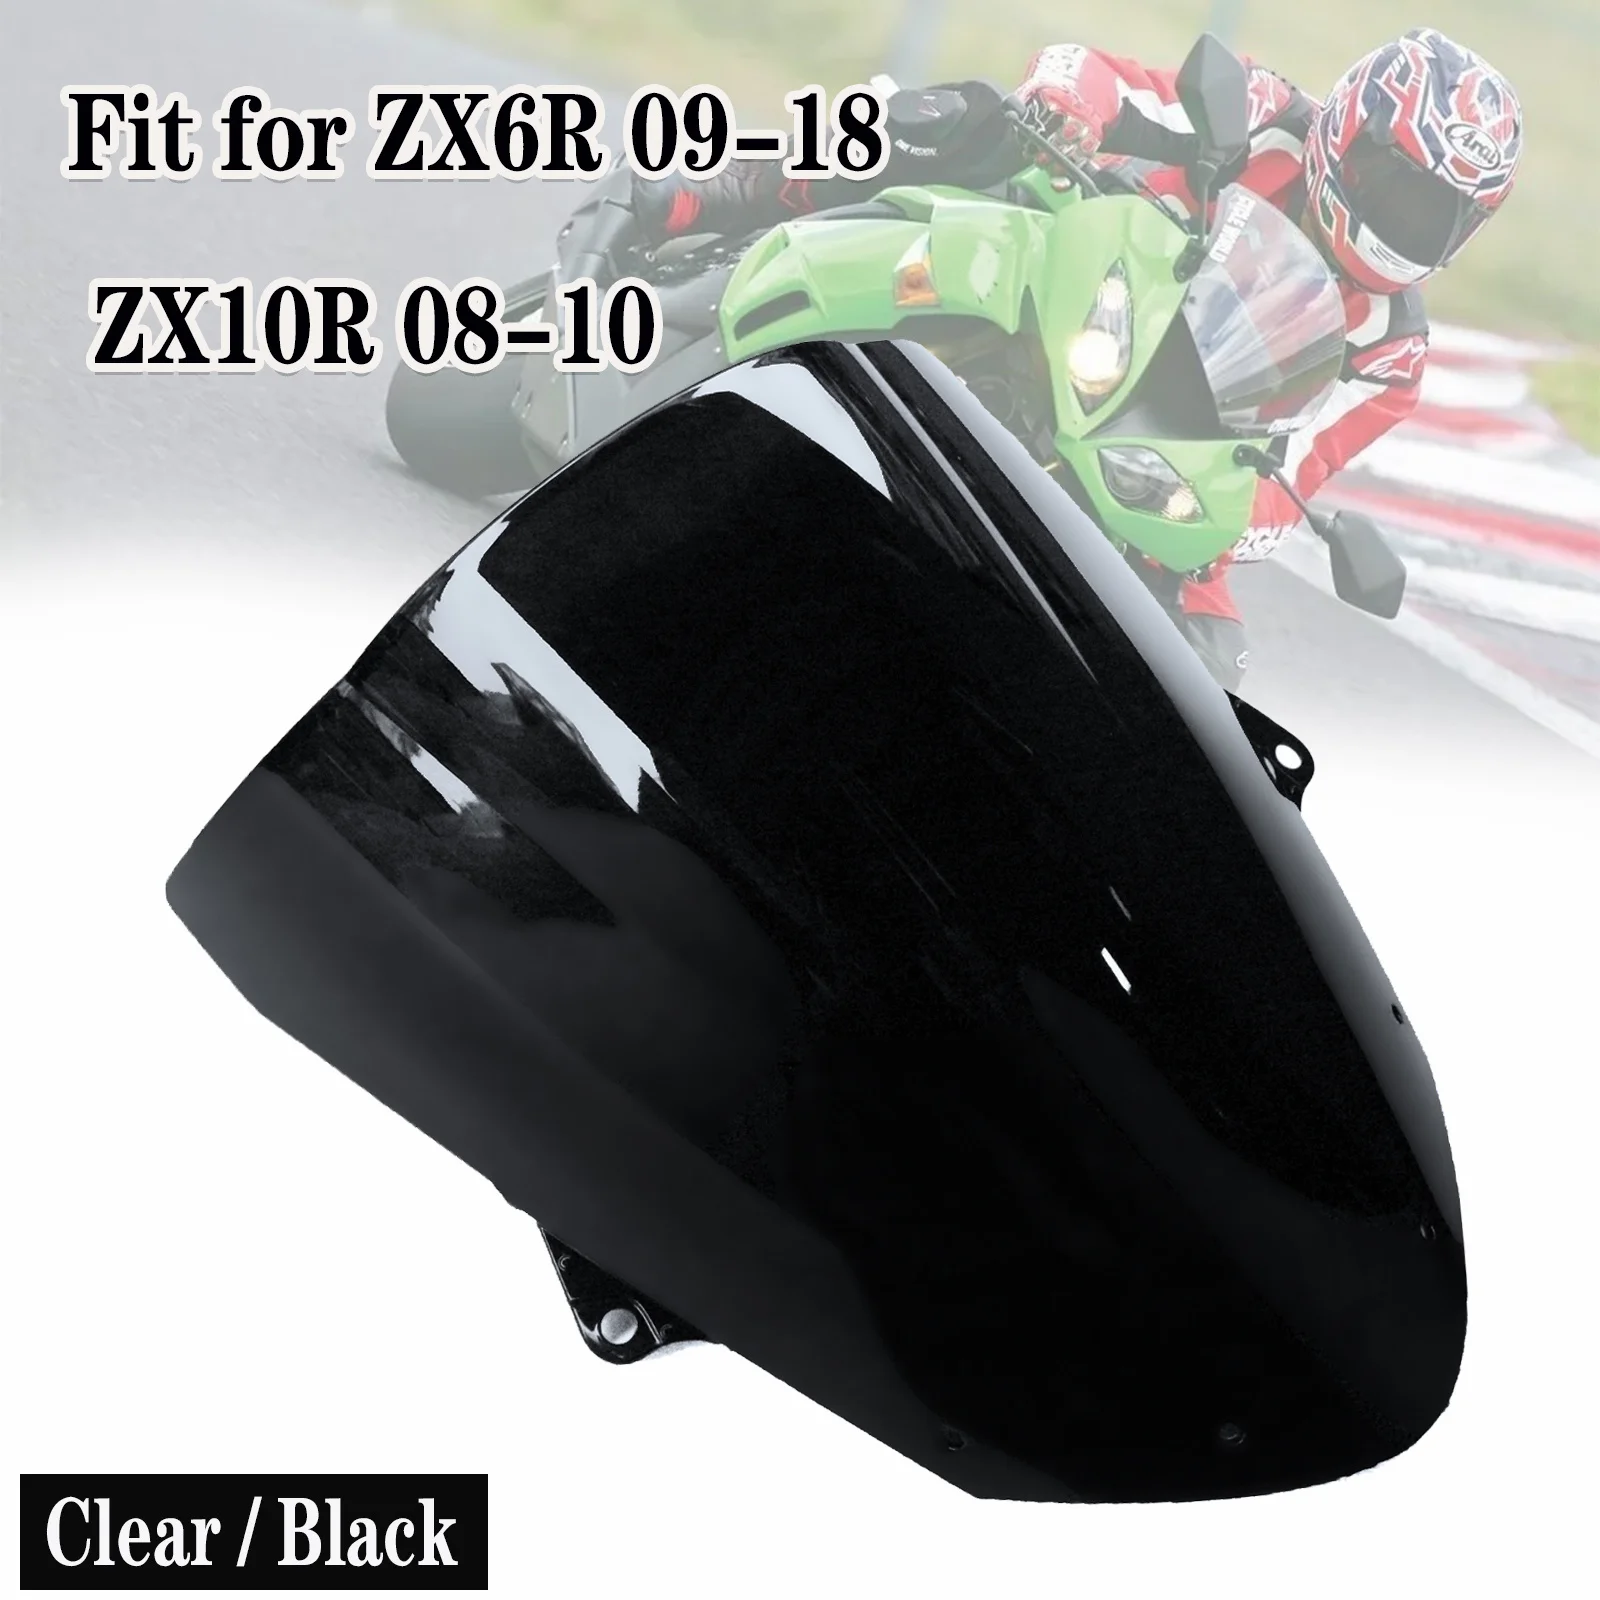 

Fit for Kawasaki 2009 - 2018 ZX6R ZX636 ZX-6R Motorcycle Accessories Windshield Windscreen ZX10R ZX-10R 2008 - 2010 ZX 6R 10R